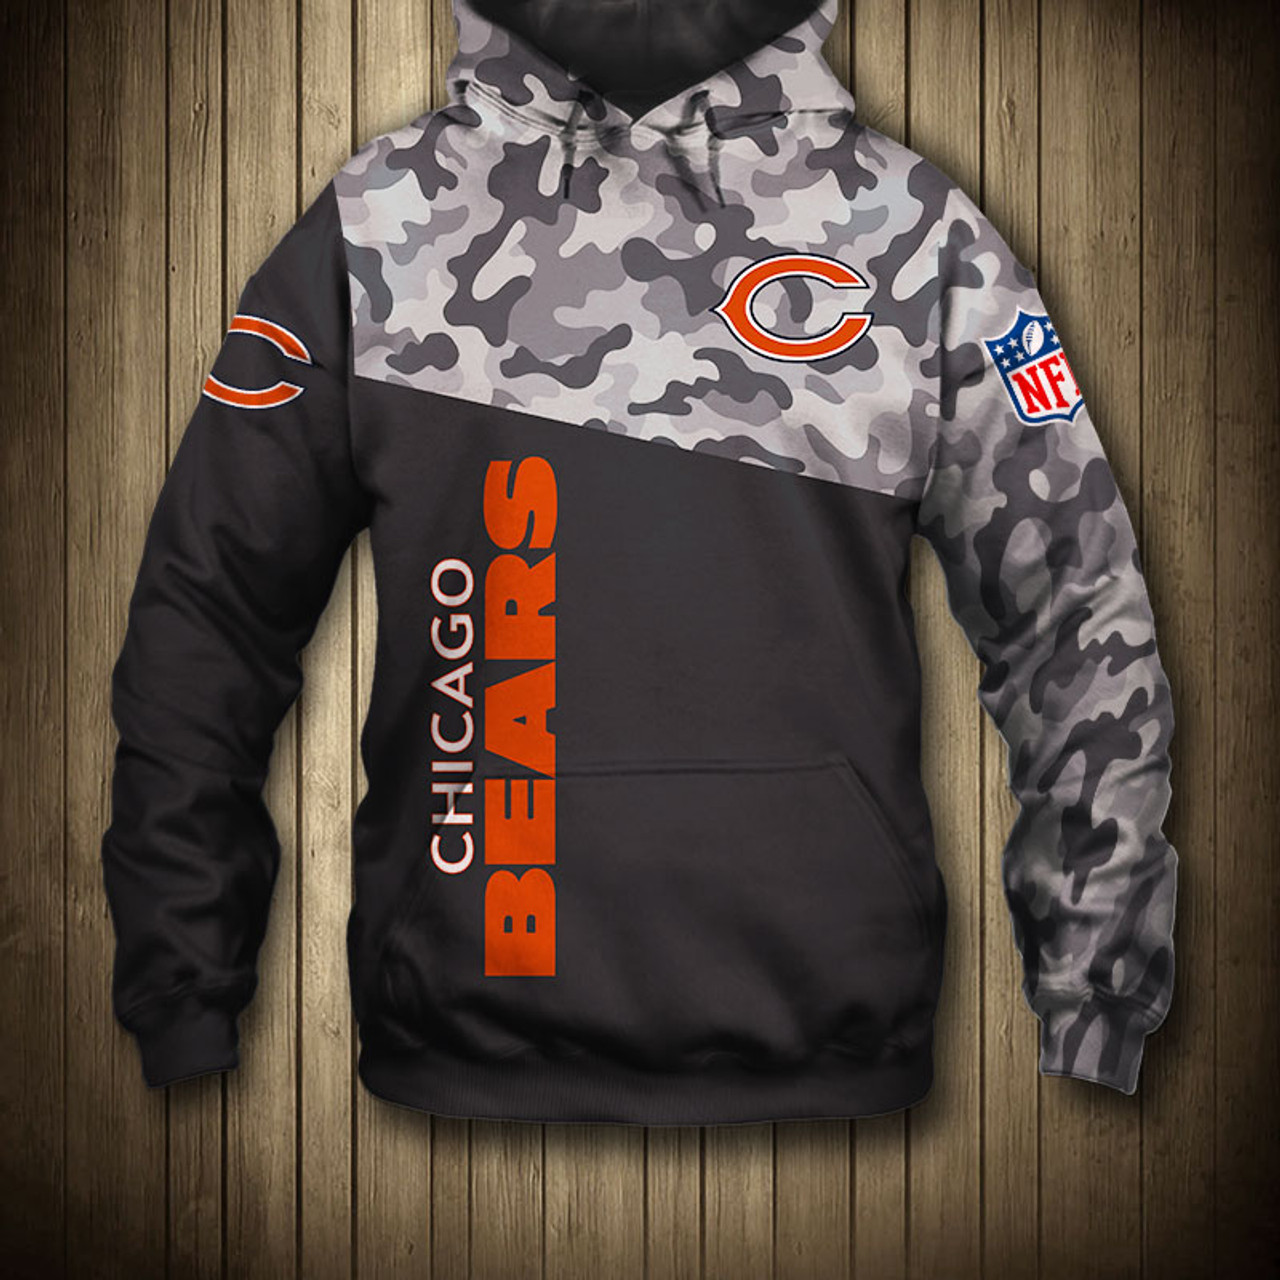 chicago bears military hoodie